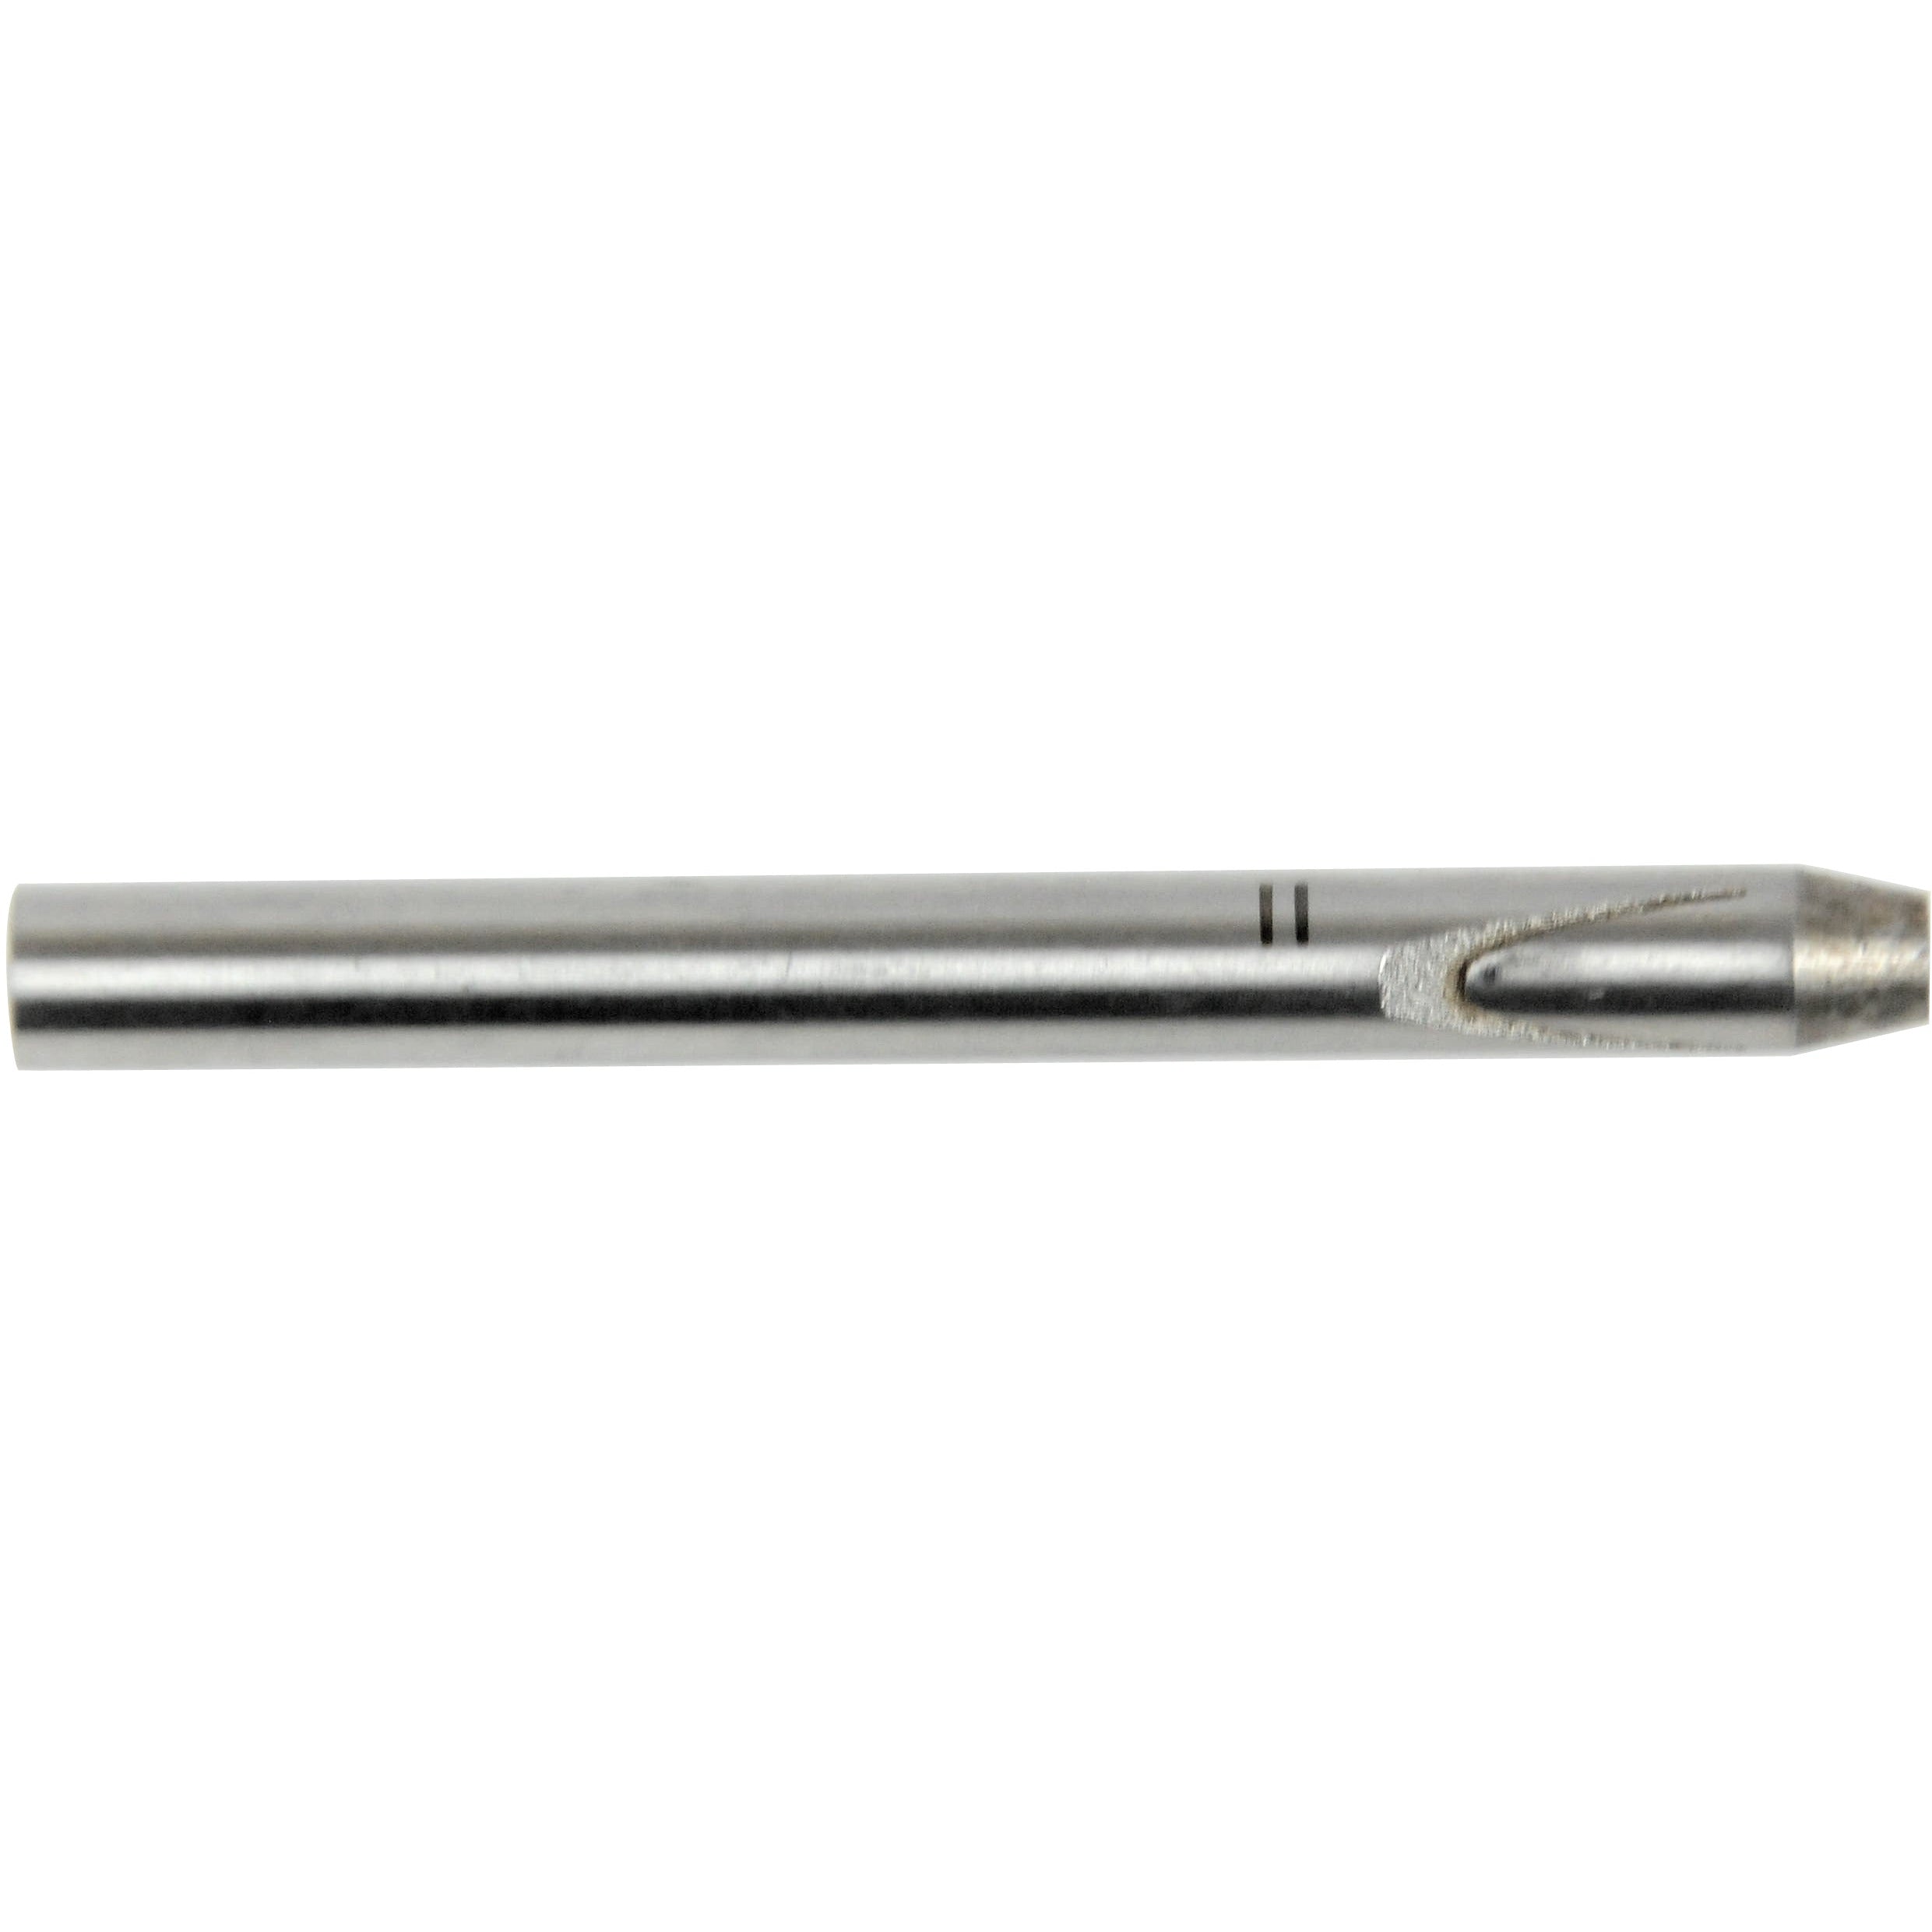 Insize Imperial Depth Micrometer 0-6" Range Series 3240-6